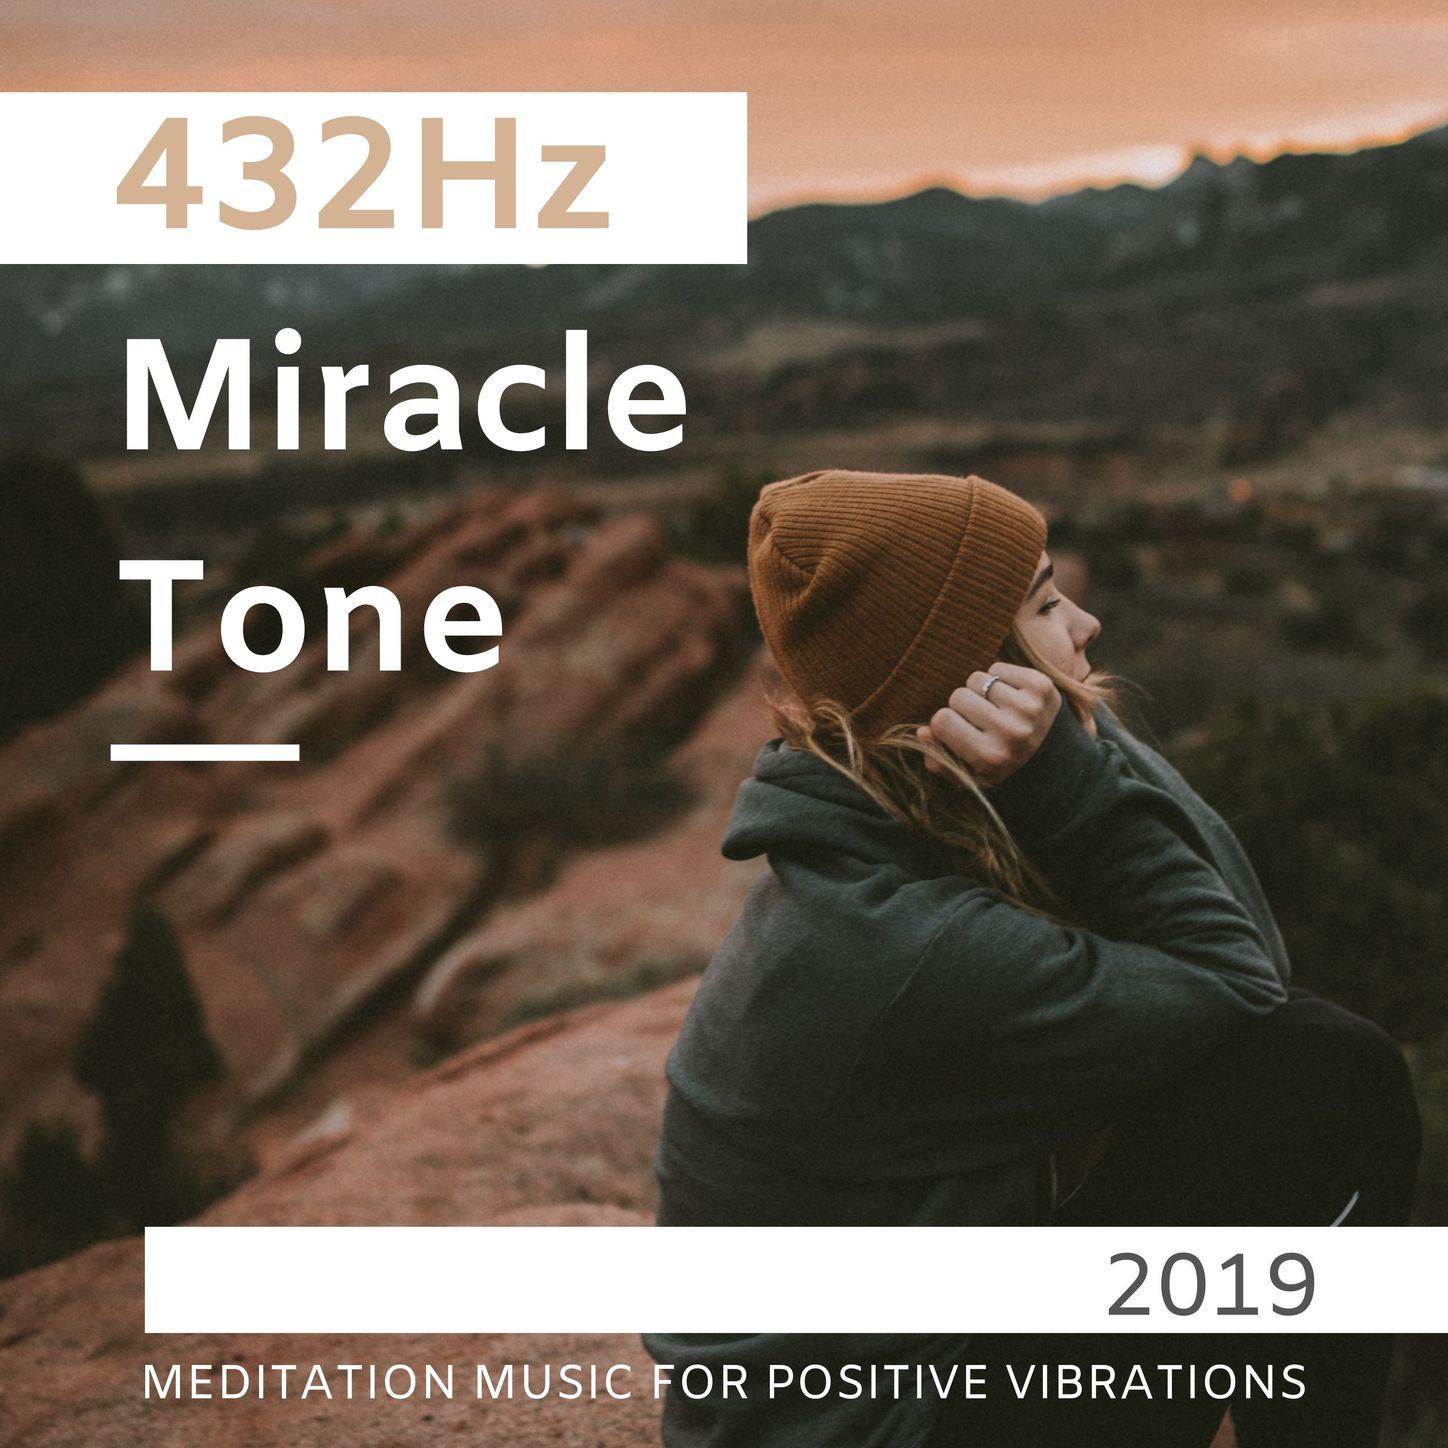 432Hz Miracle Tone